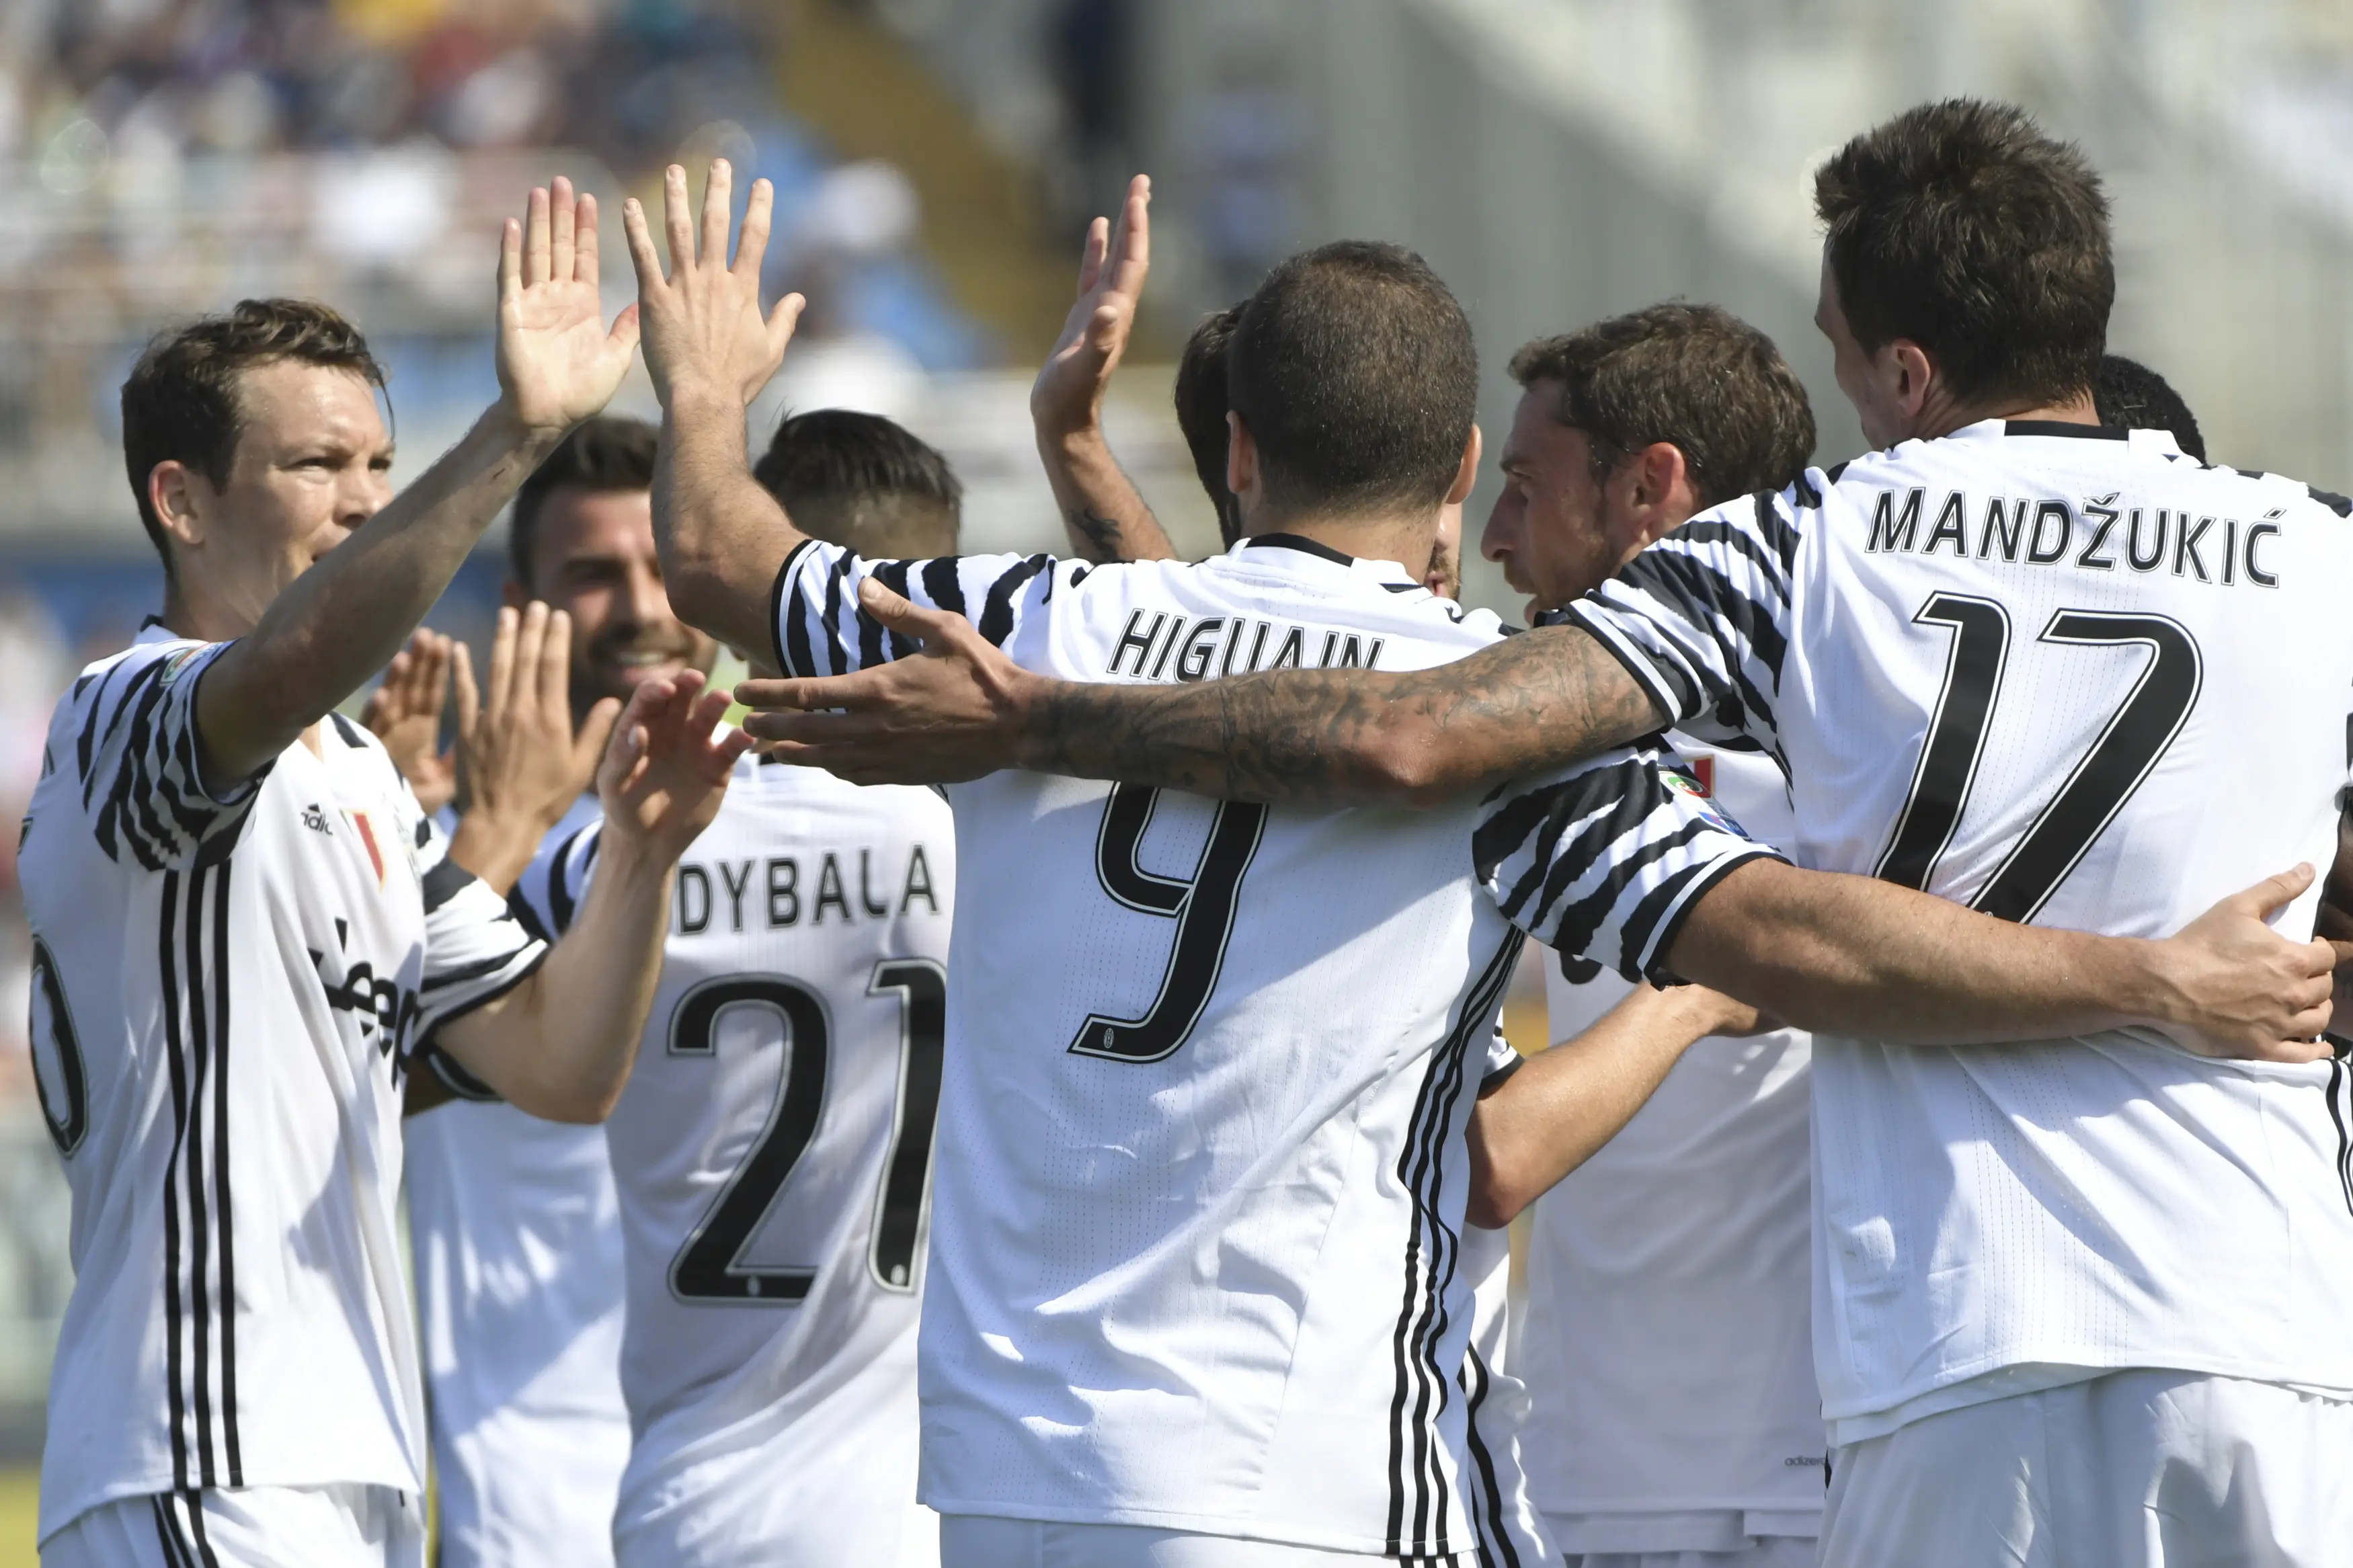 Selebrasi para pemain Juventus menyambut gol Gonzalo Higuain ke gawang Pescara. (ANDREAS SOLARO / AFP)